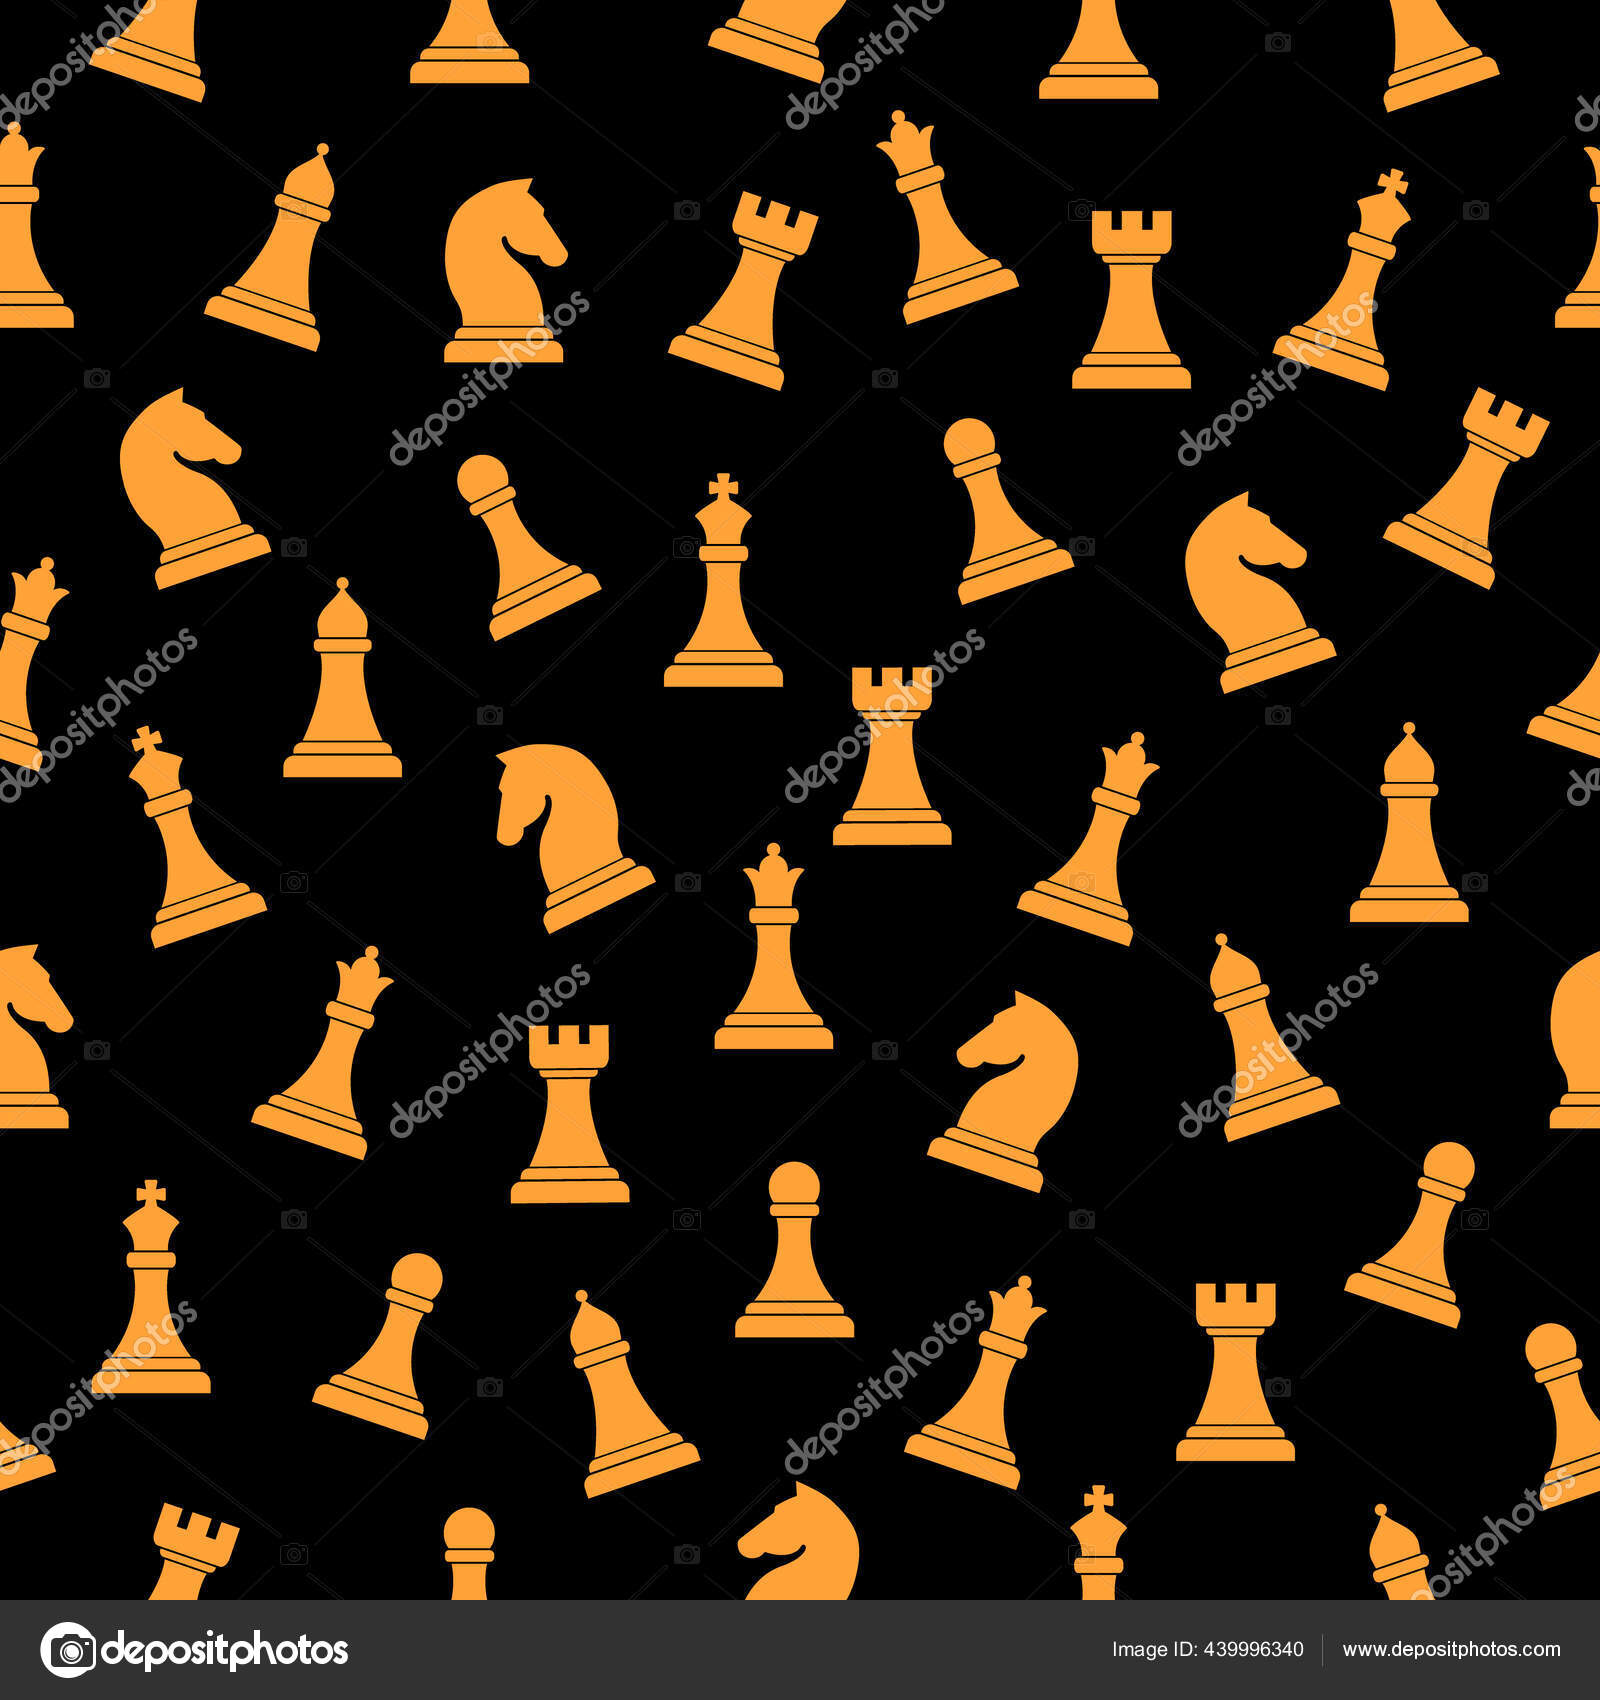 Conjunto de ícones de peças de xadrez elementos de jogo de